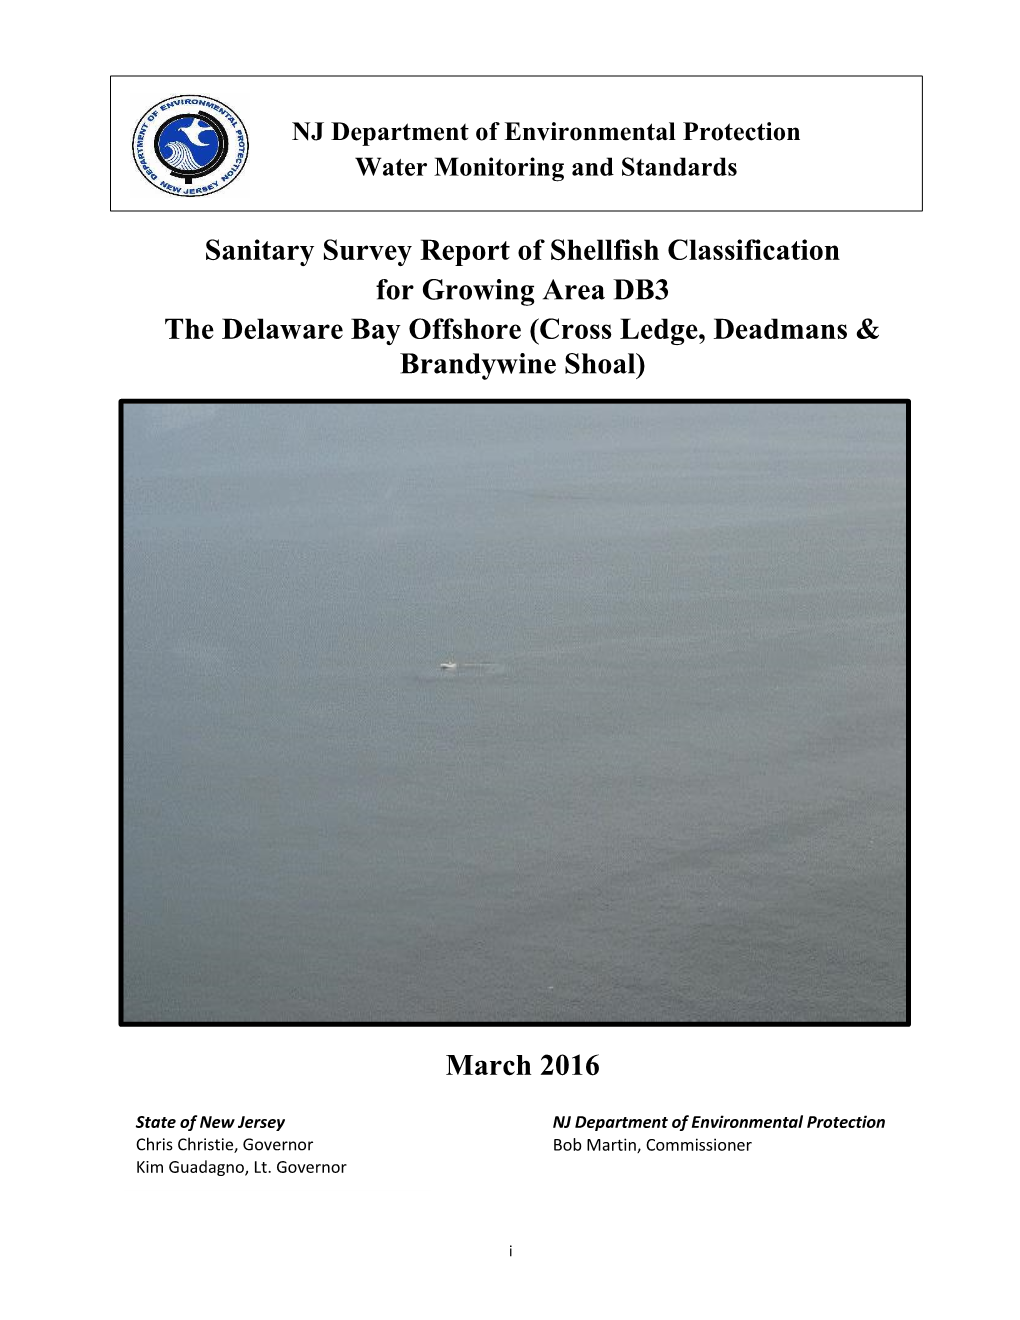 Sanitary Survey Report of Shellfish Classification for Growing Area DB3 the Delaware Bay Offshore (Cross Ledge, Deadmans & Brandywine Shoal)